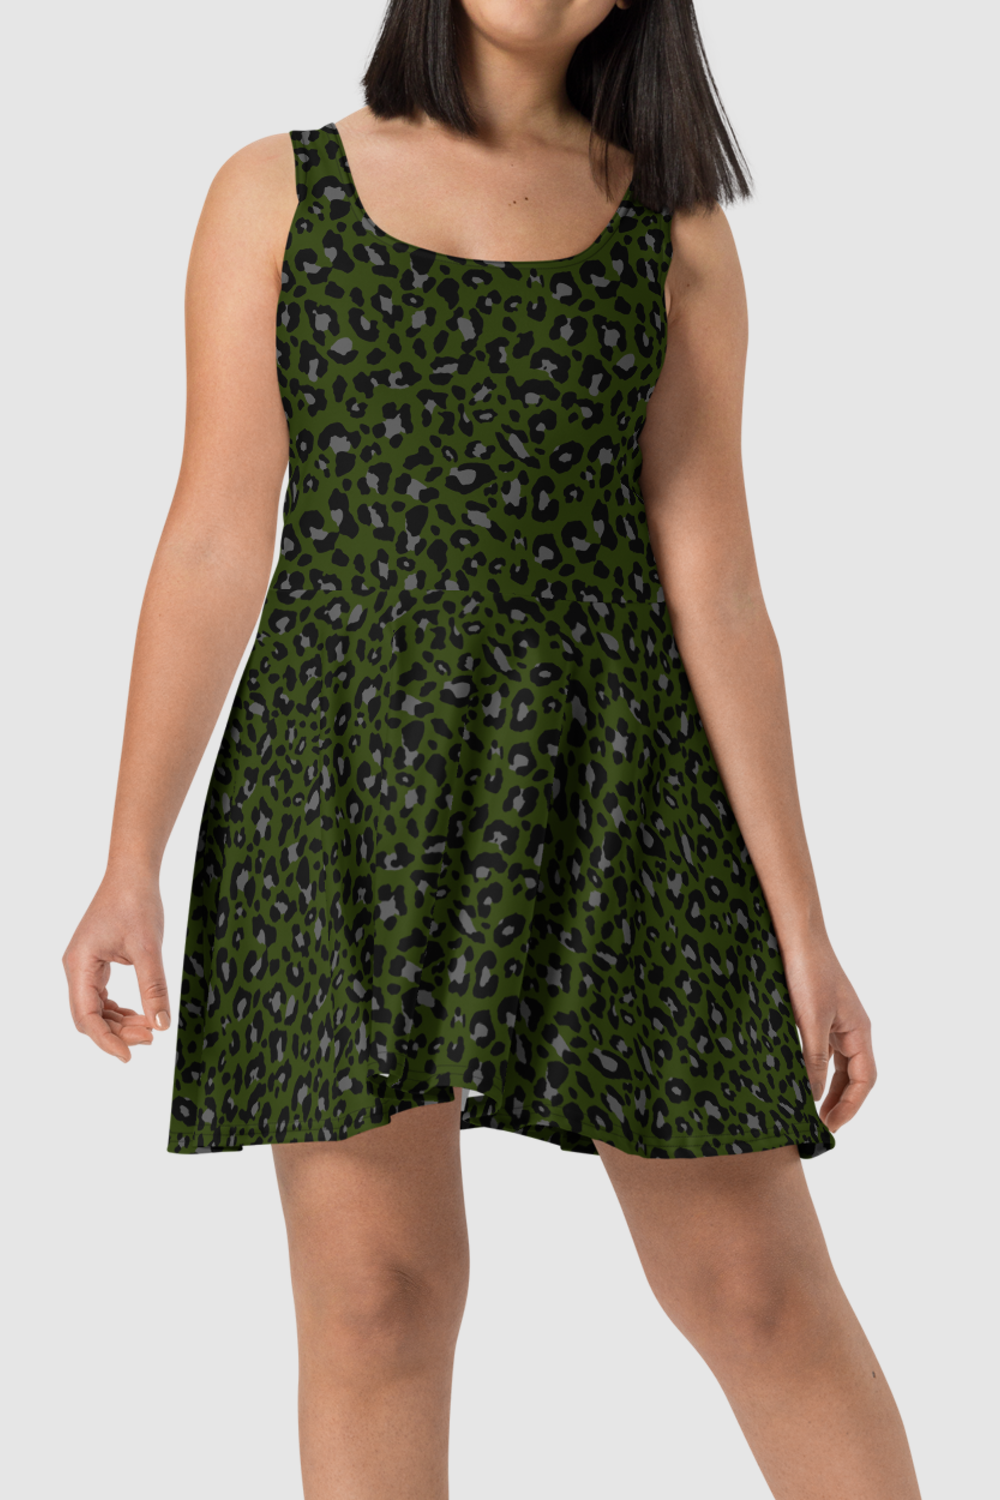 Serana Green Leopard Print Skater Dress